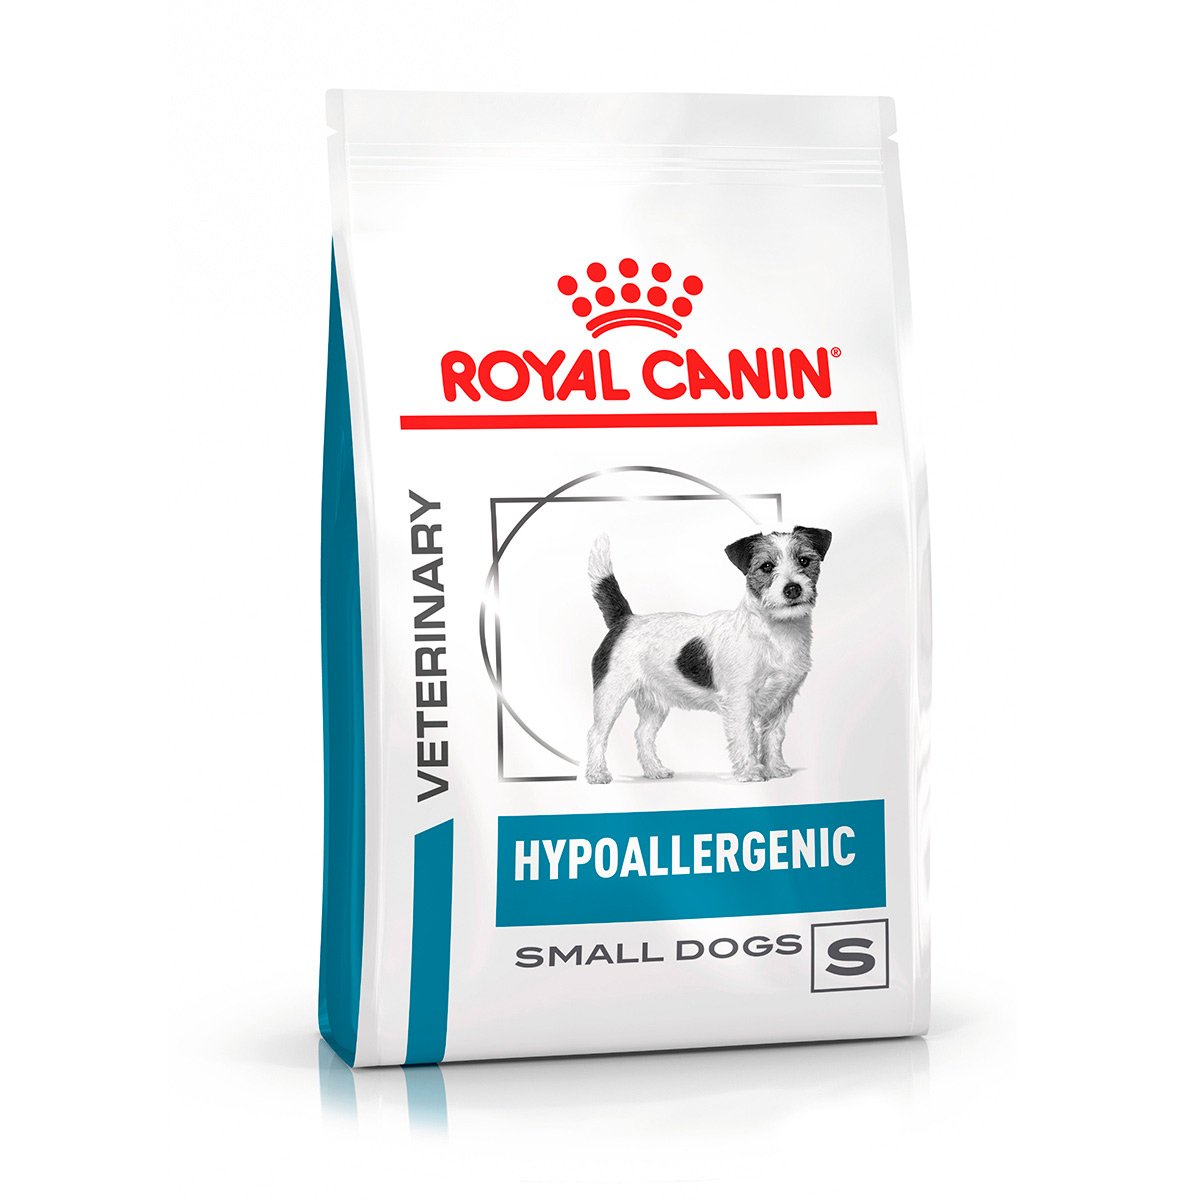 ROYAL CANIN® Veterinary HYPOALLERGENIC SMALL DOGS Trockenfutter für Hunde 1kg von Royal Canin